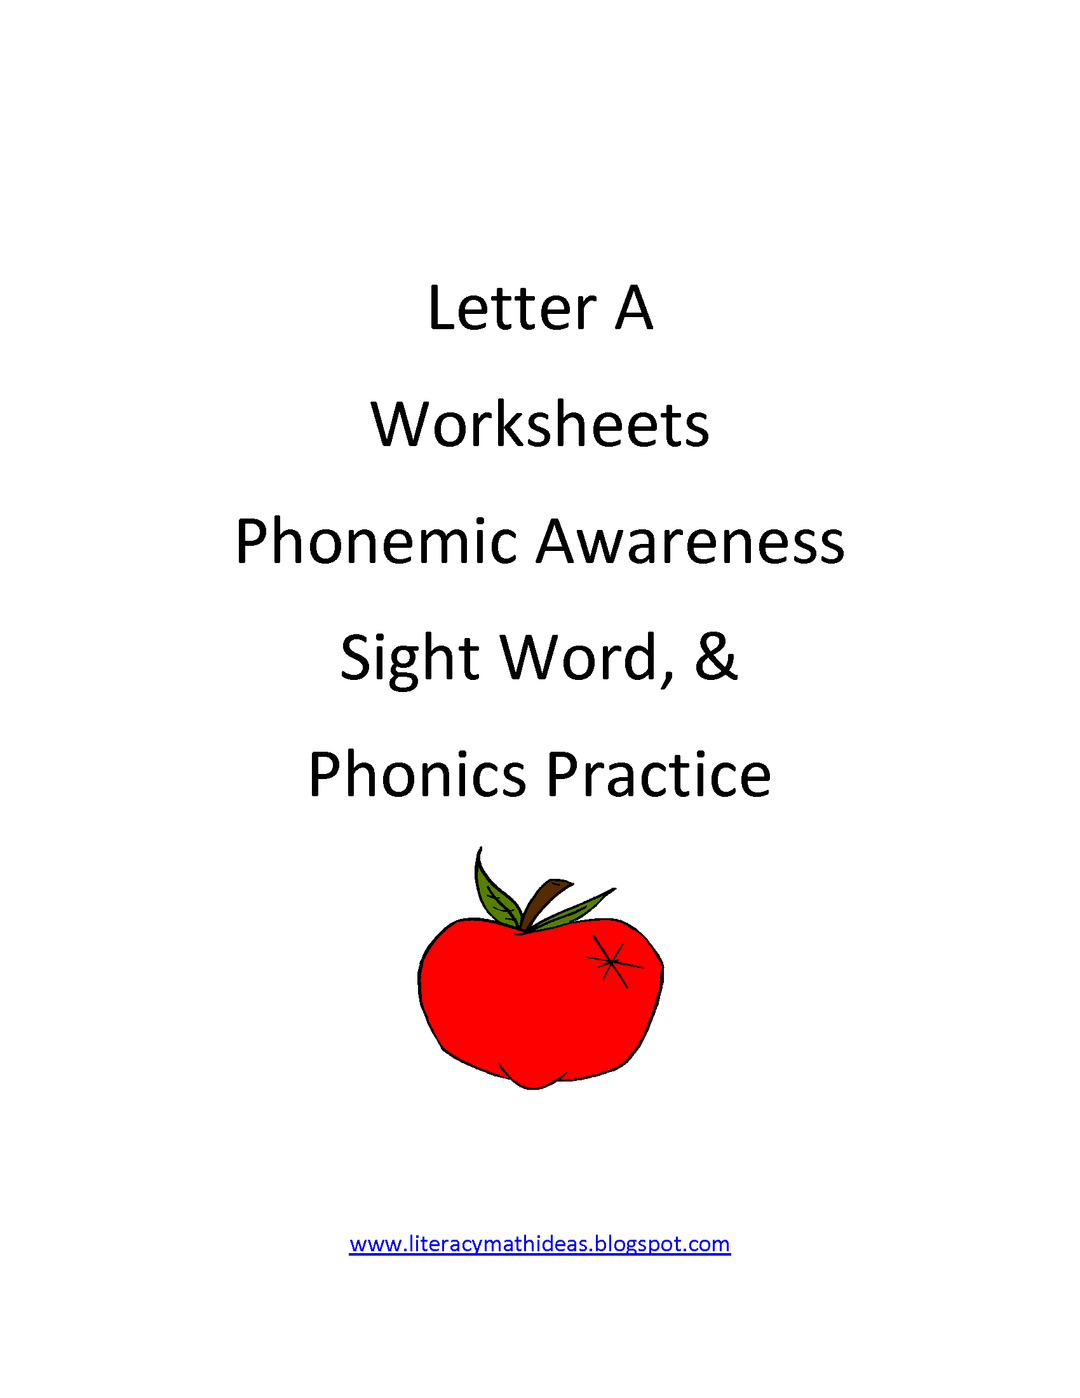 Letter A Practice: 16 Worksheets